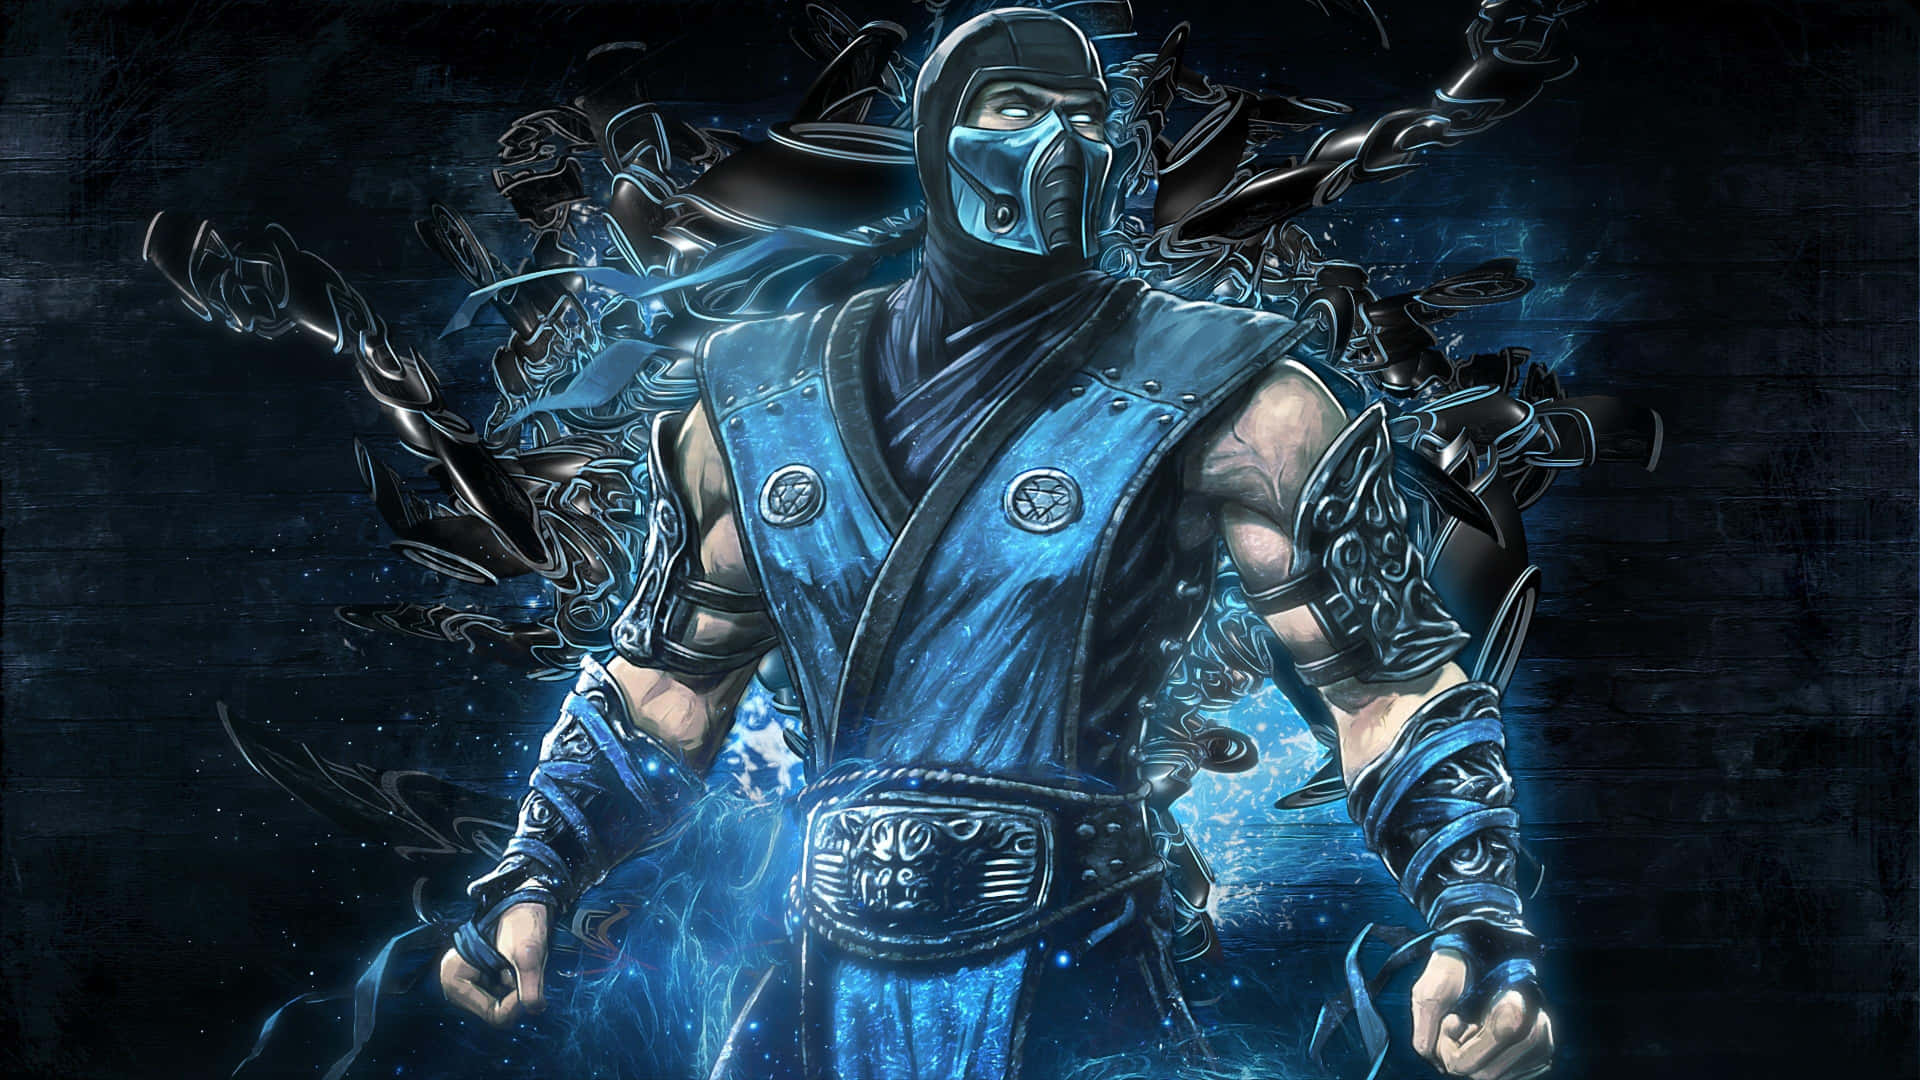 Chilling Power - Sub-Zero in Mortal Kombat Wallpaper